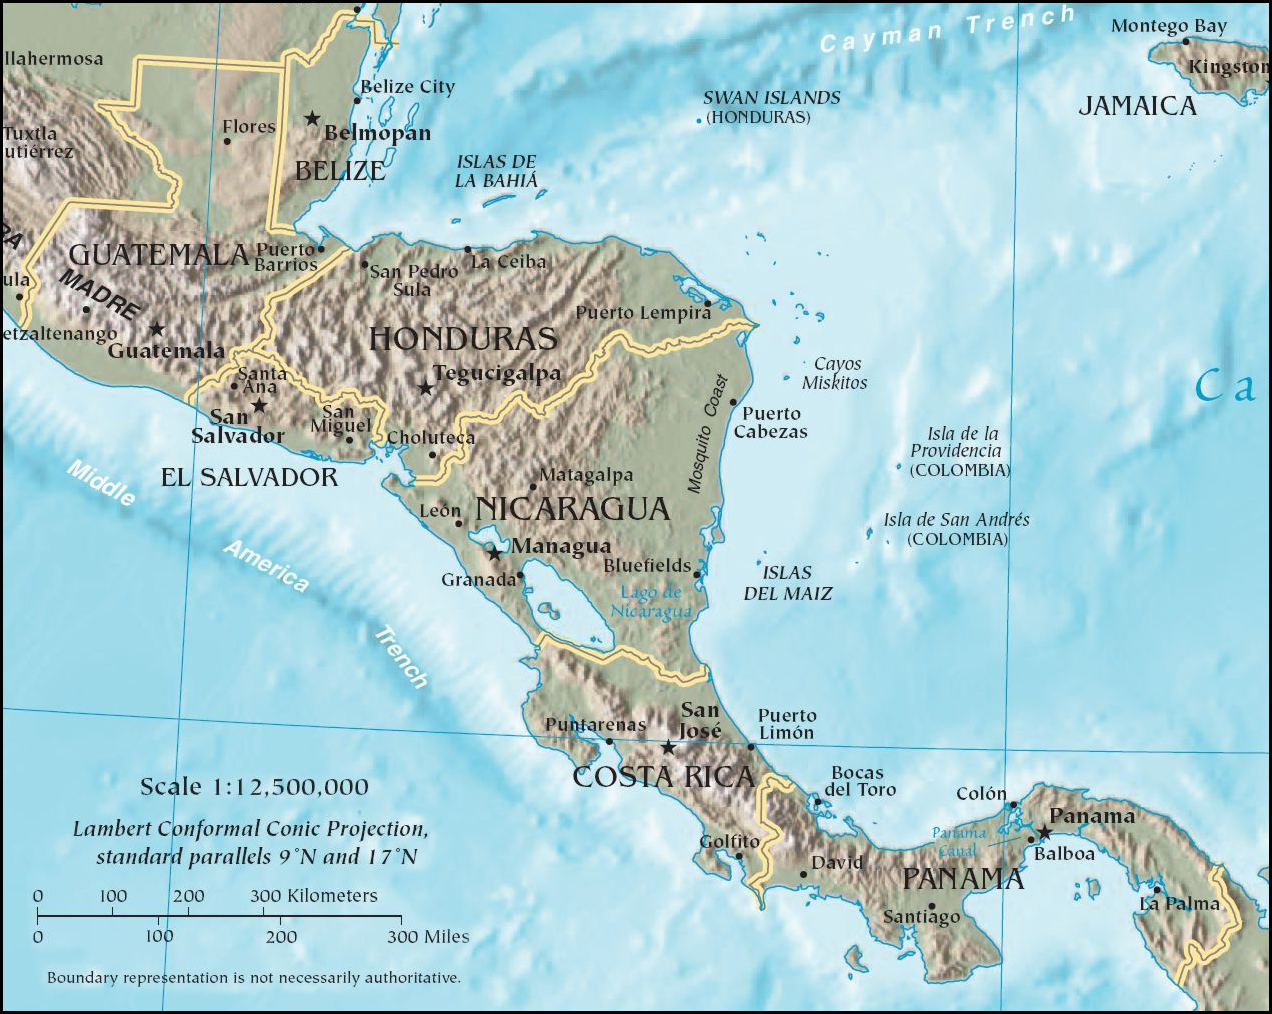 Relieve de América Central